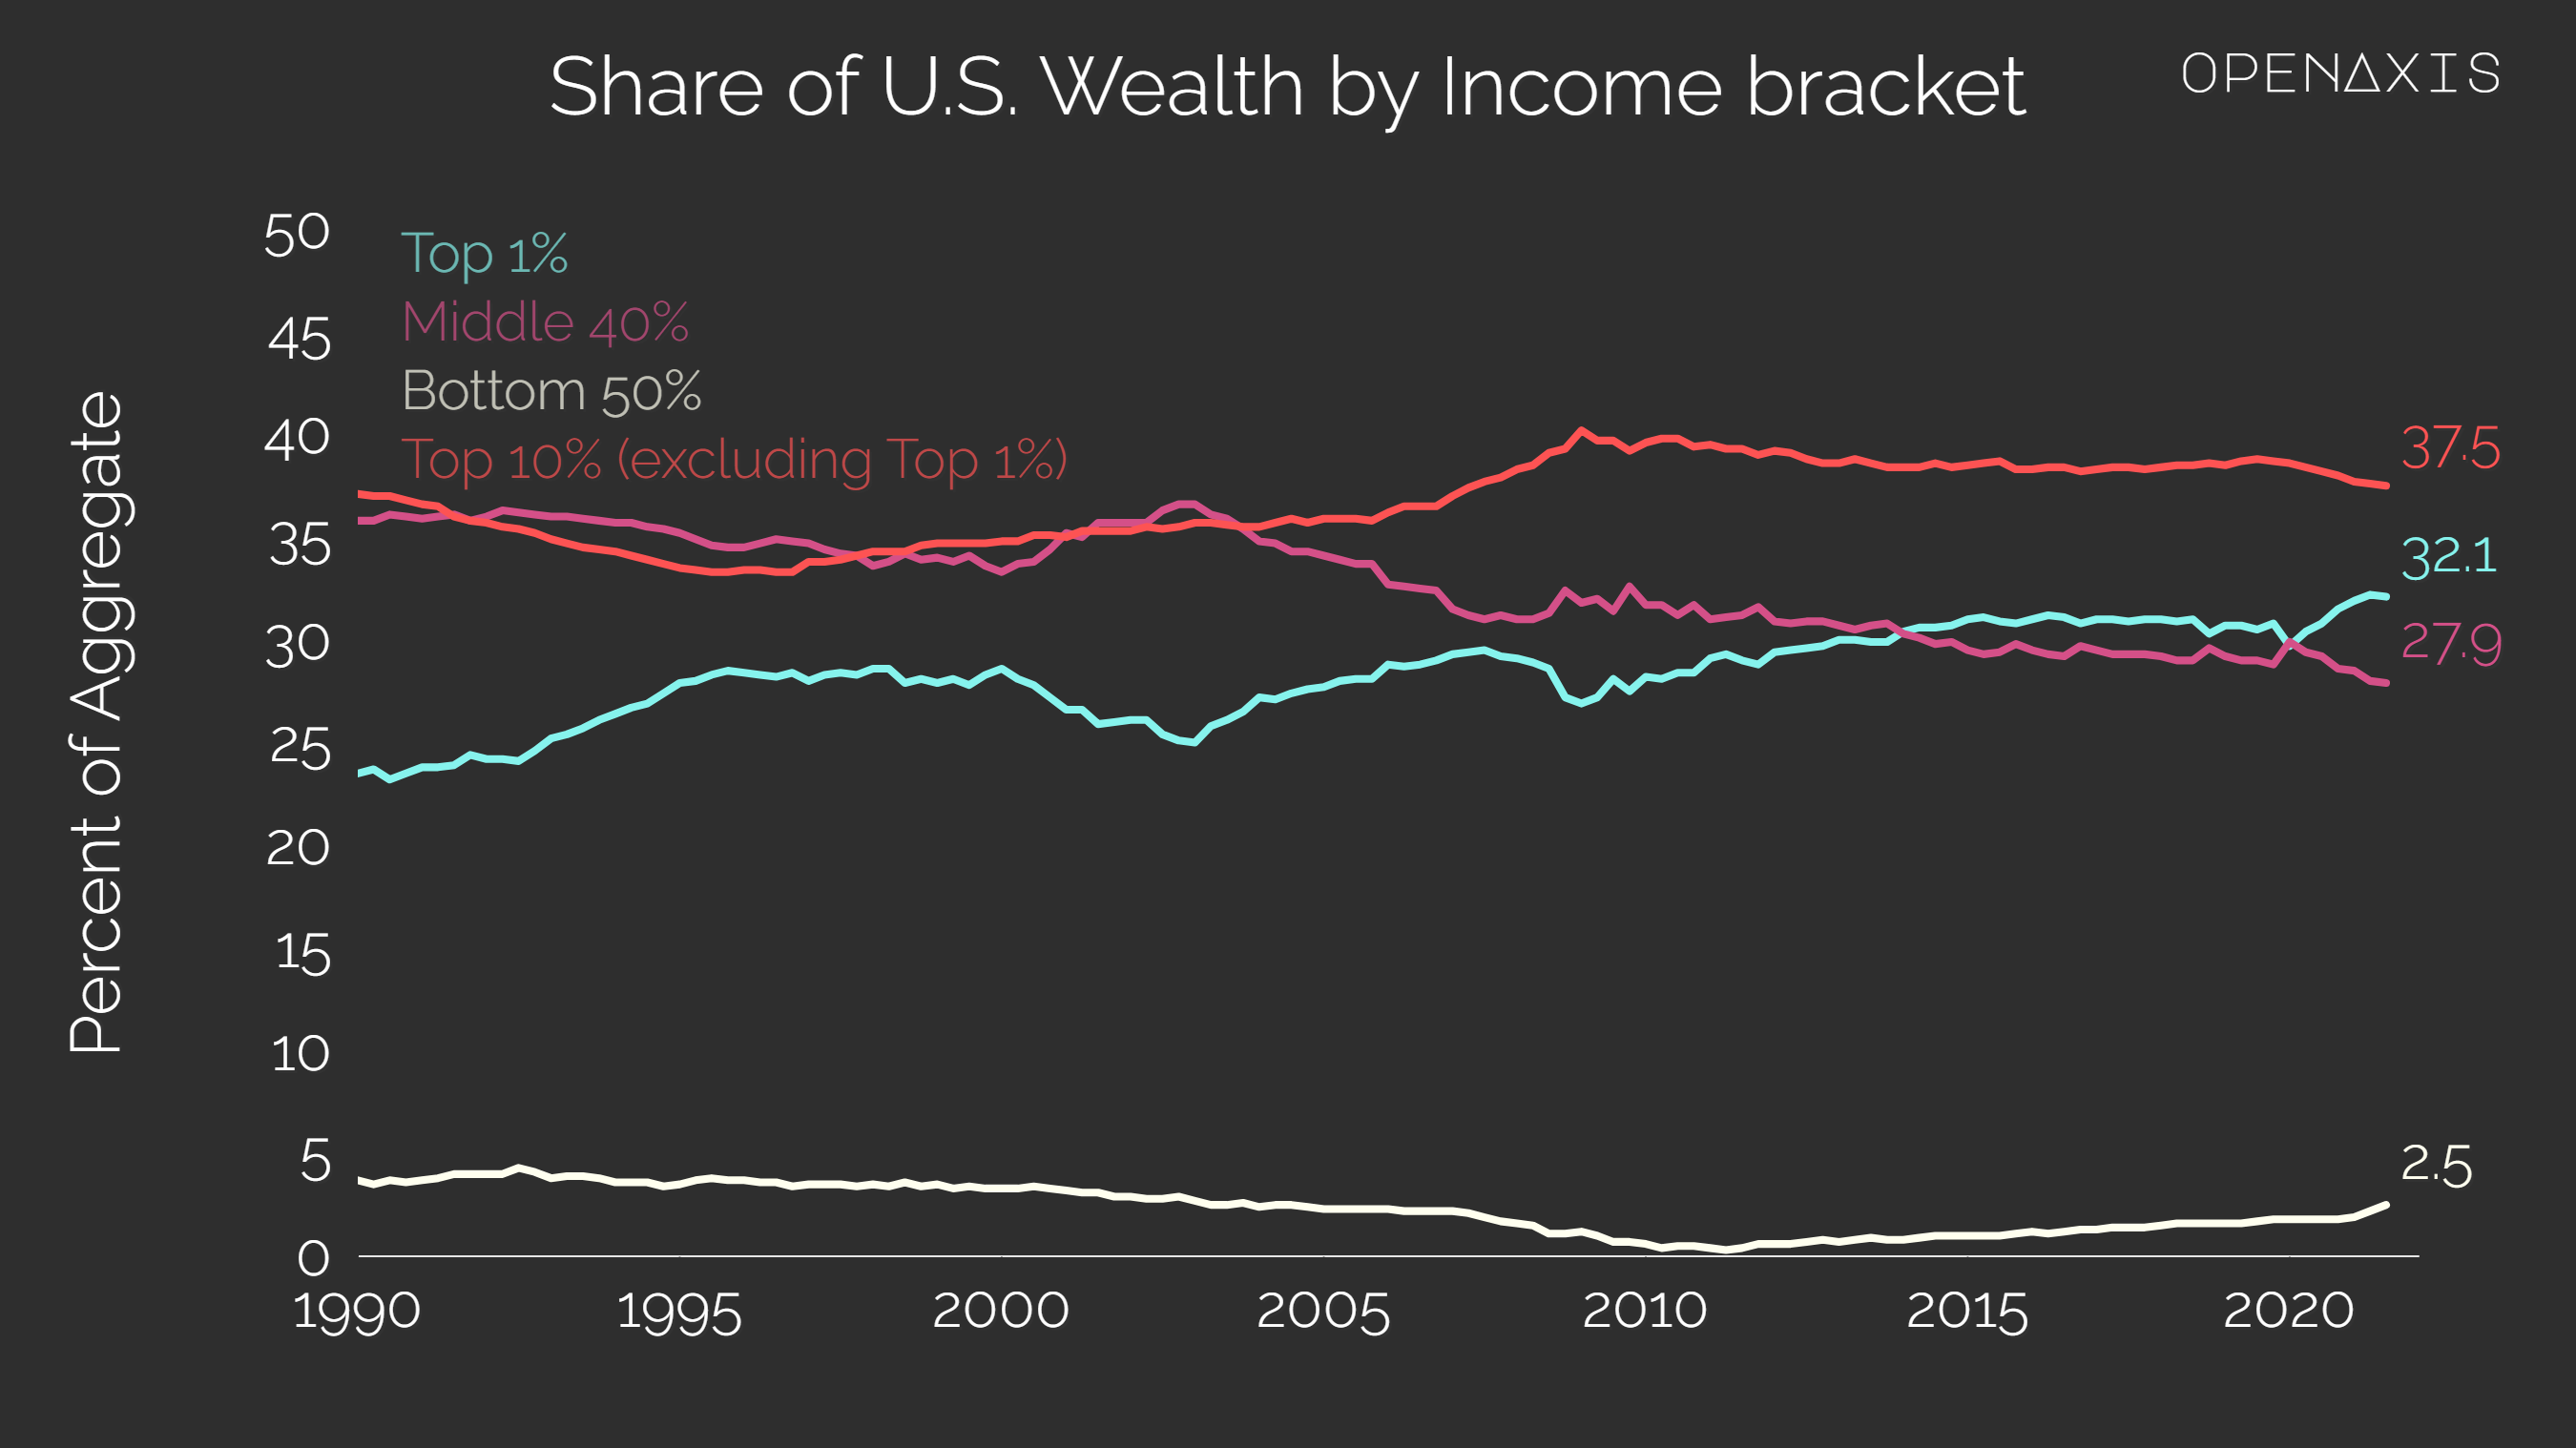 "Share of U.S. Wealth by Income bracket"